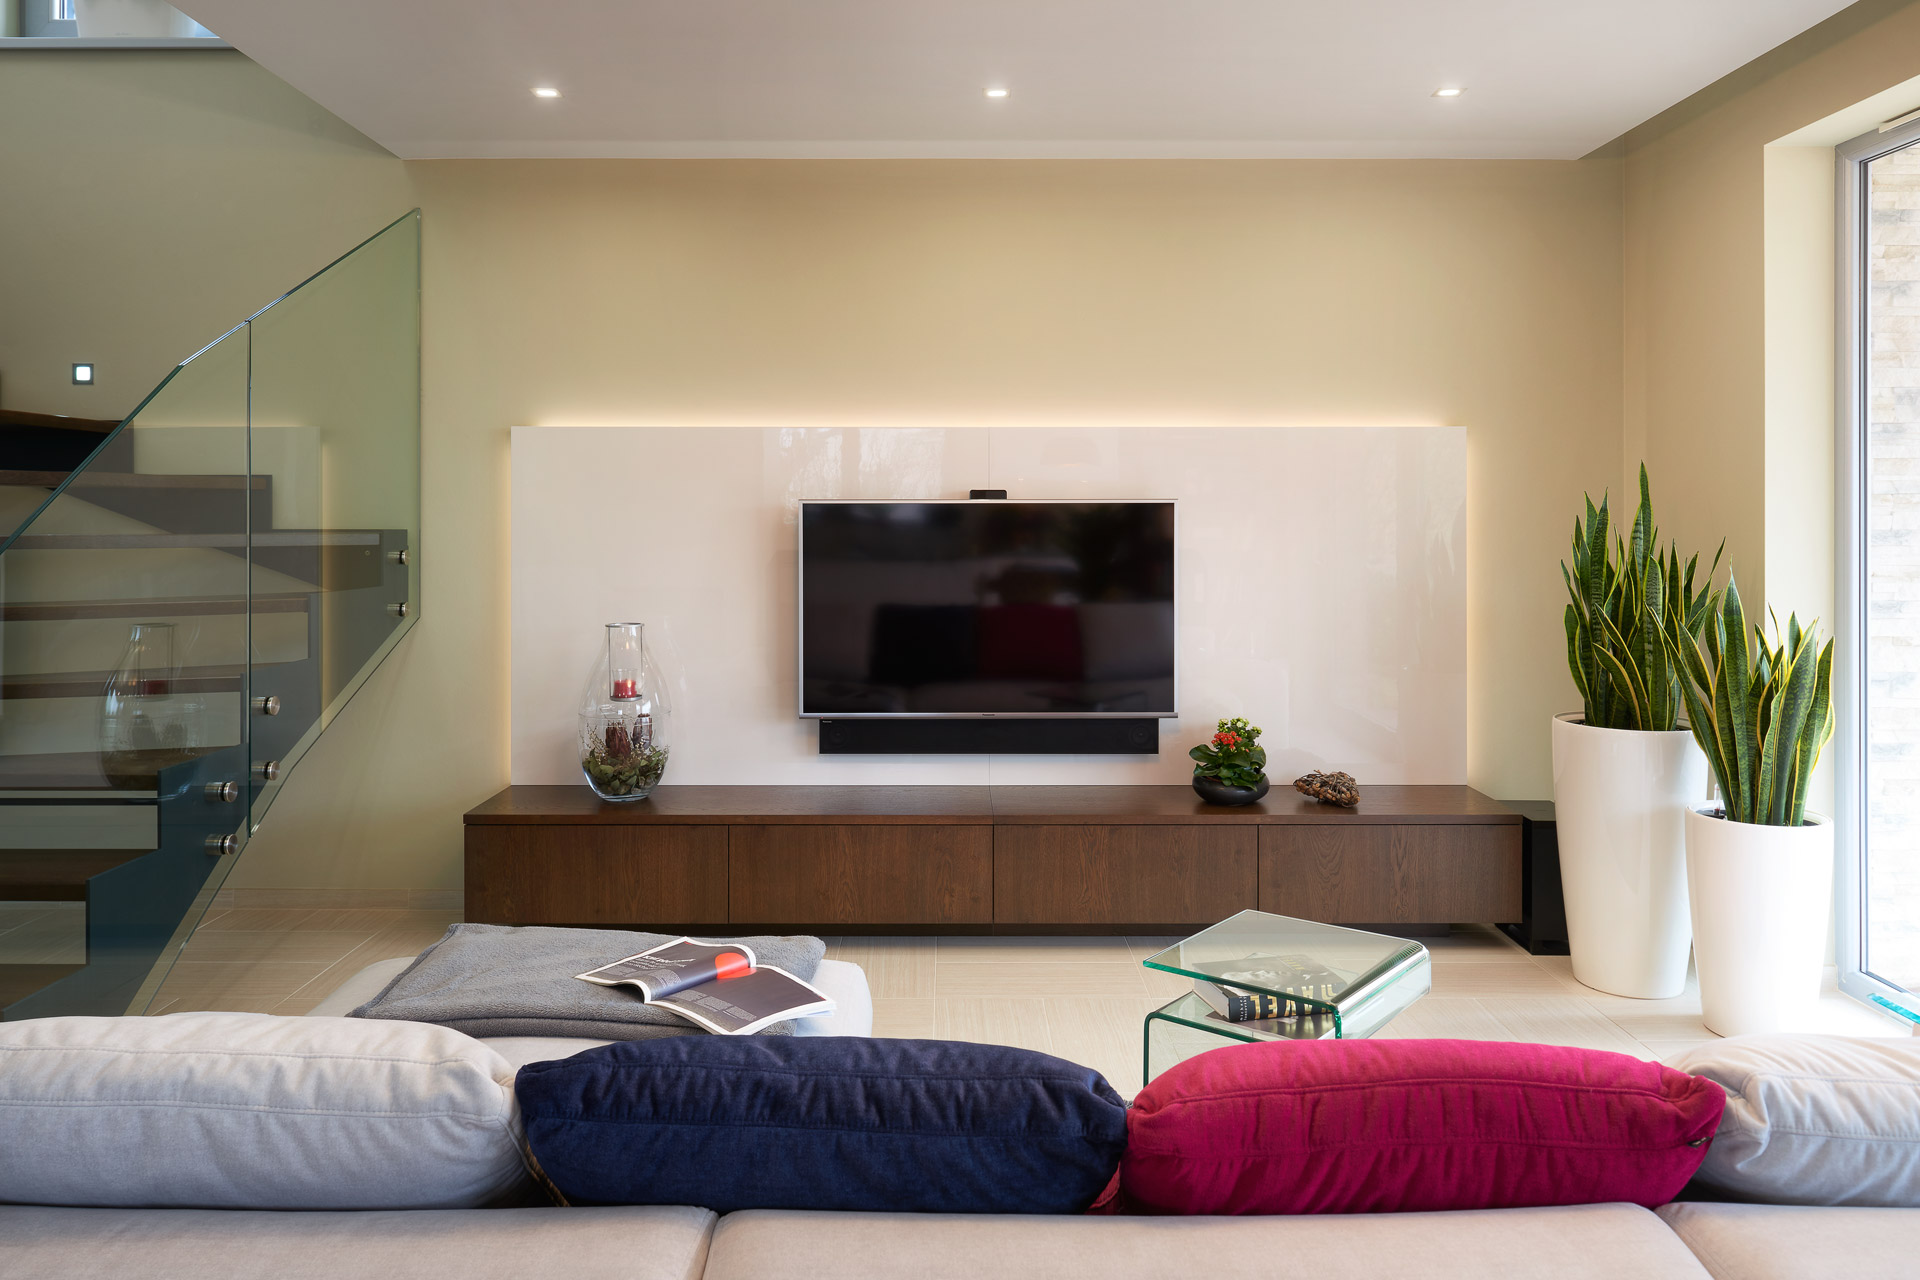 Hanák Furniture Complete customized interior